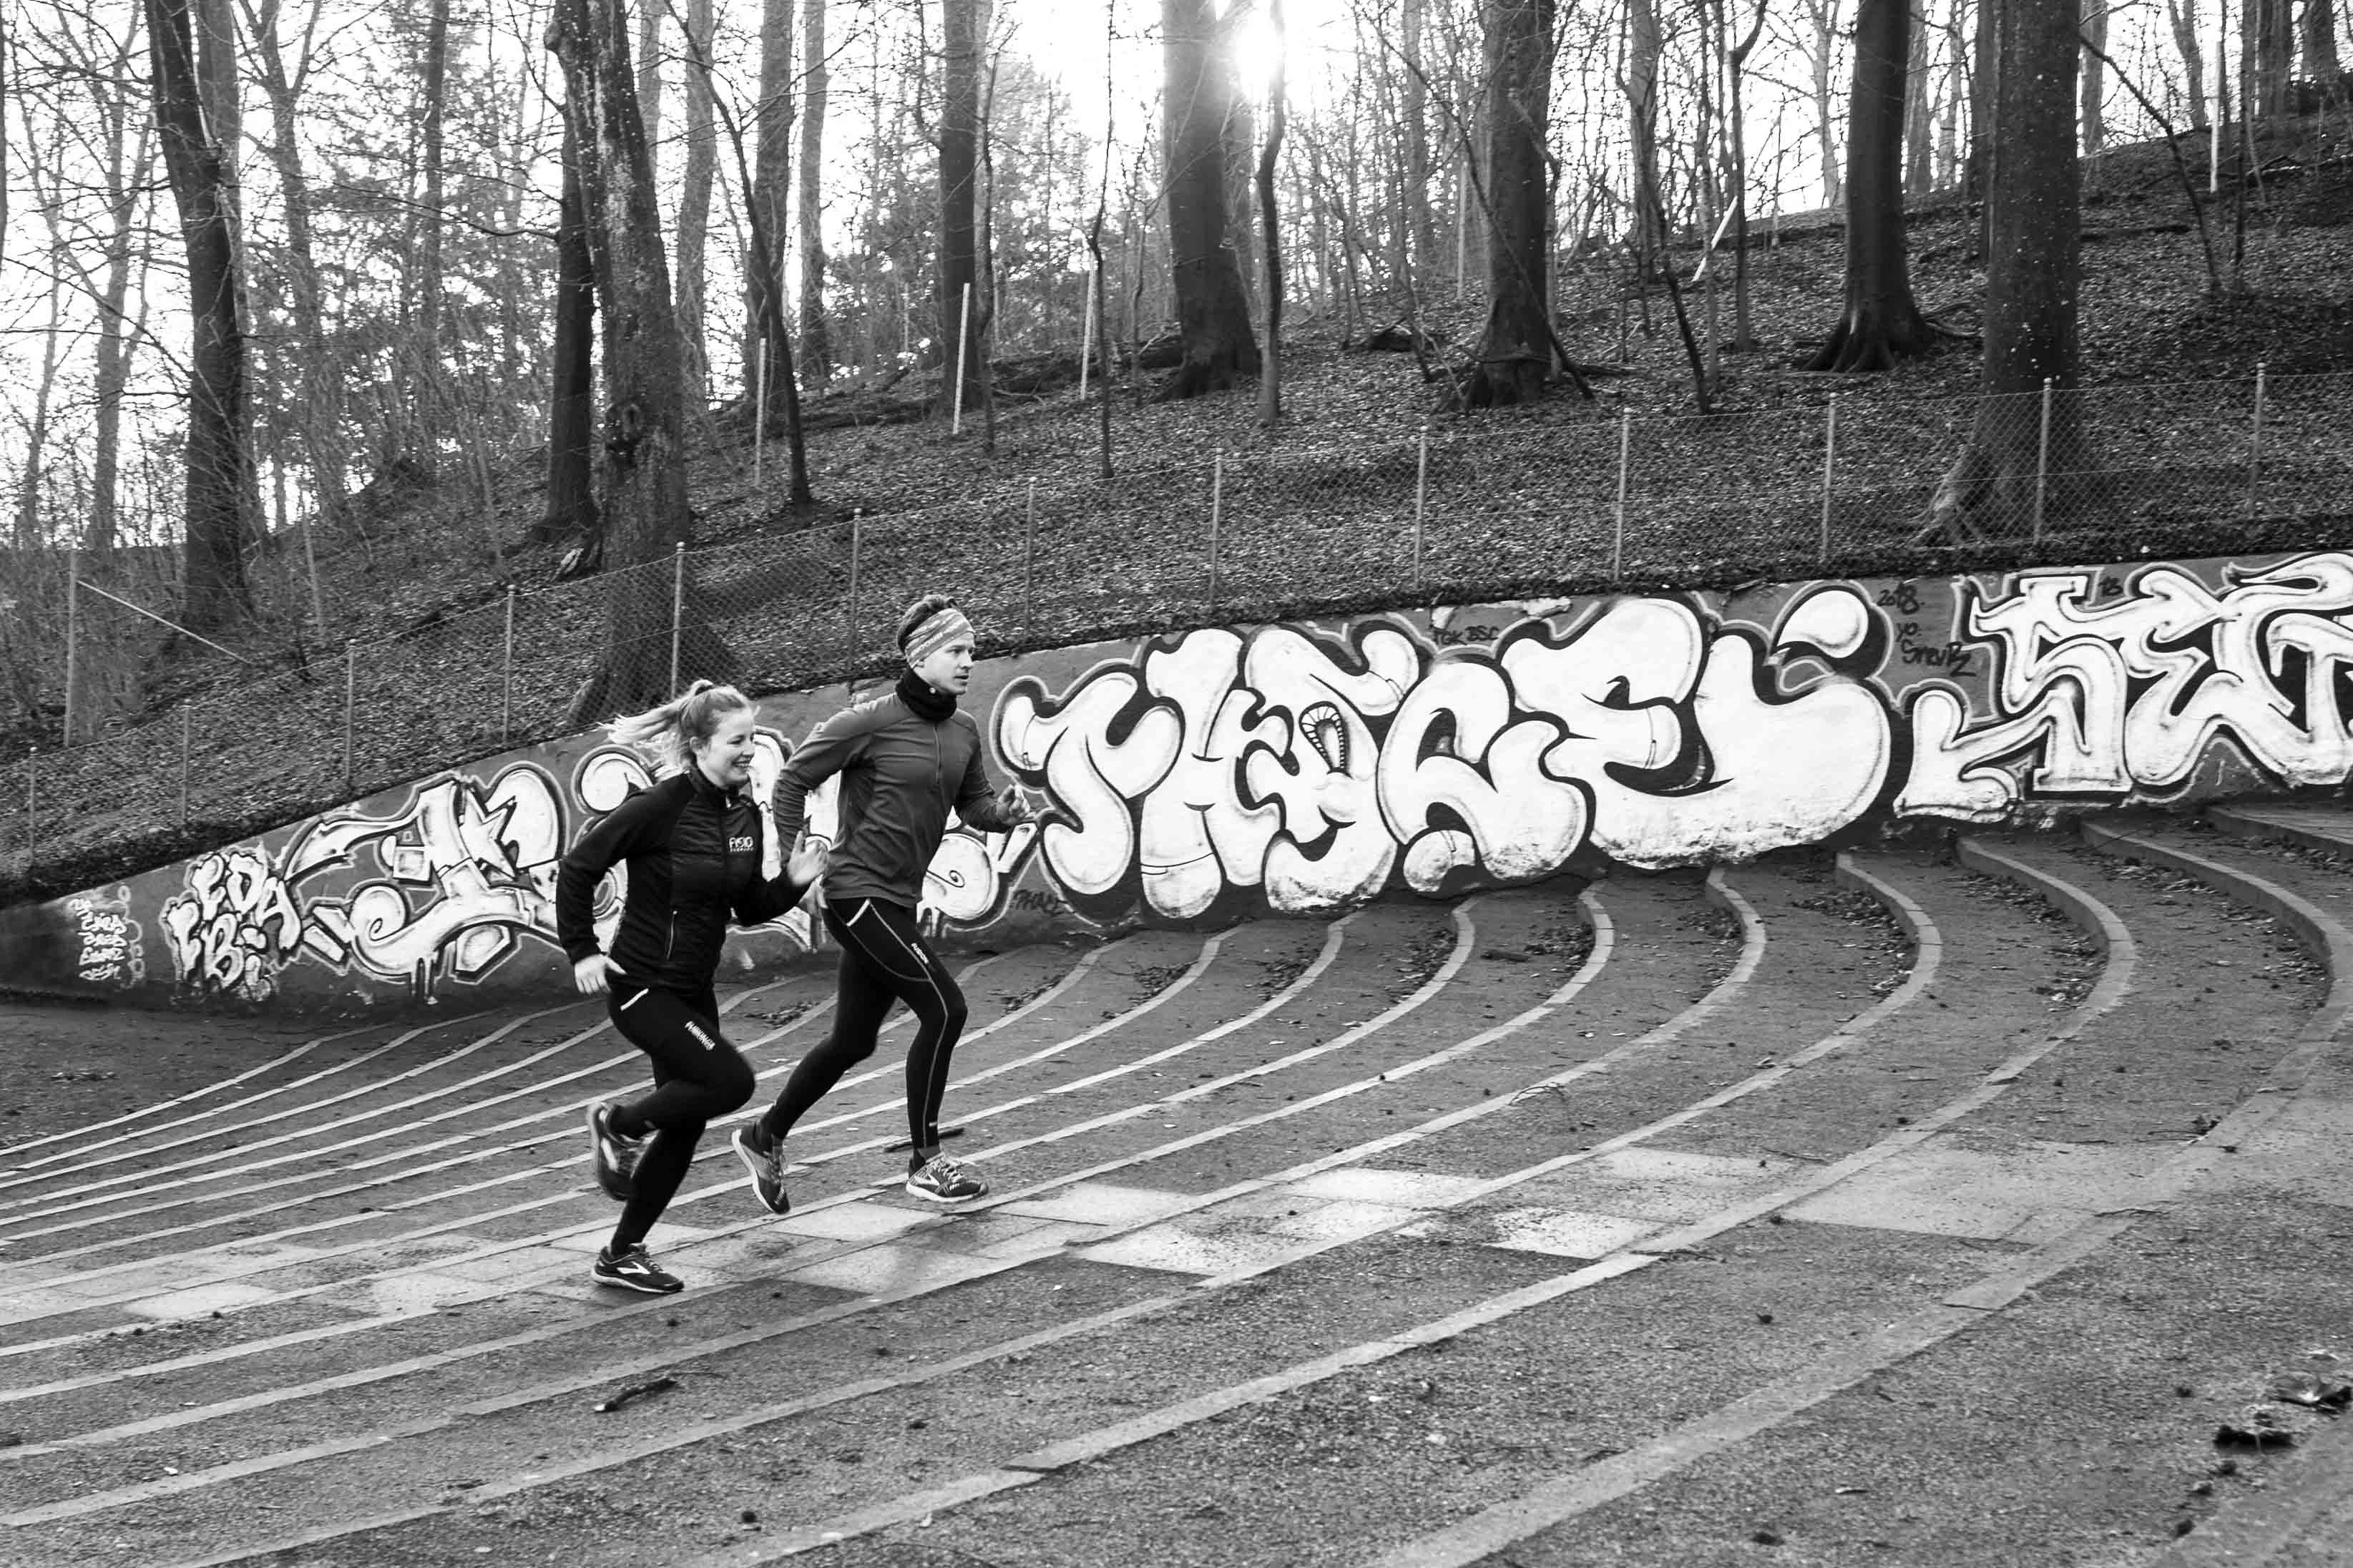 Paradis Hurtigt mikrobølgeovn Løbeskadet - hurtigt tilbage i løbeskoene - Coahcing, Performance og test :  FysioDanmark Aalborg